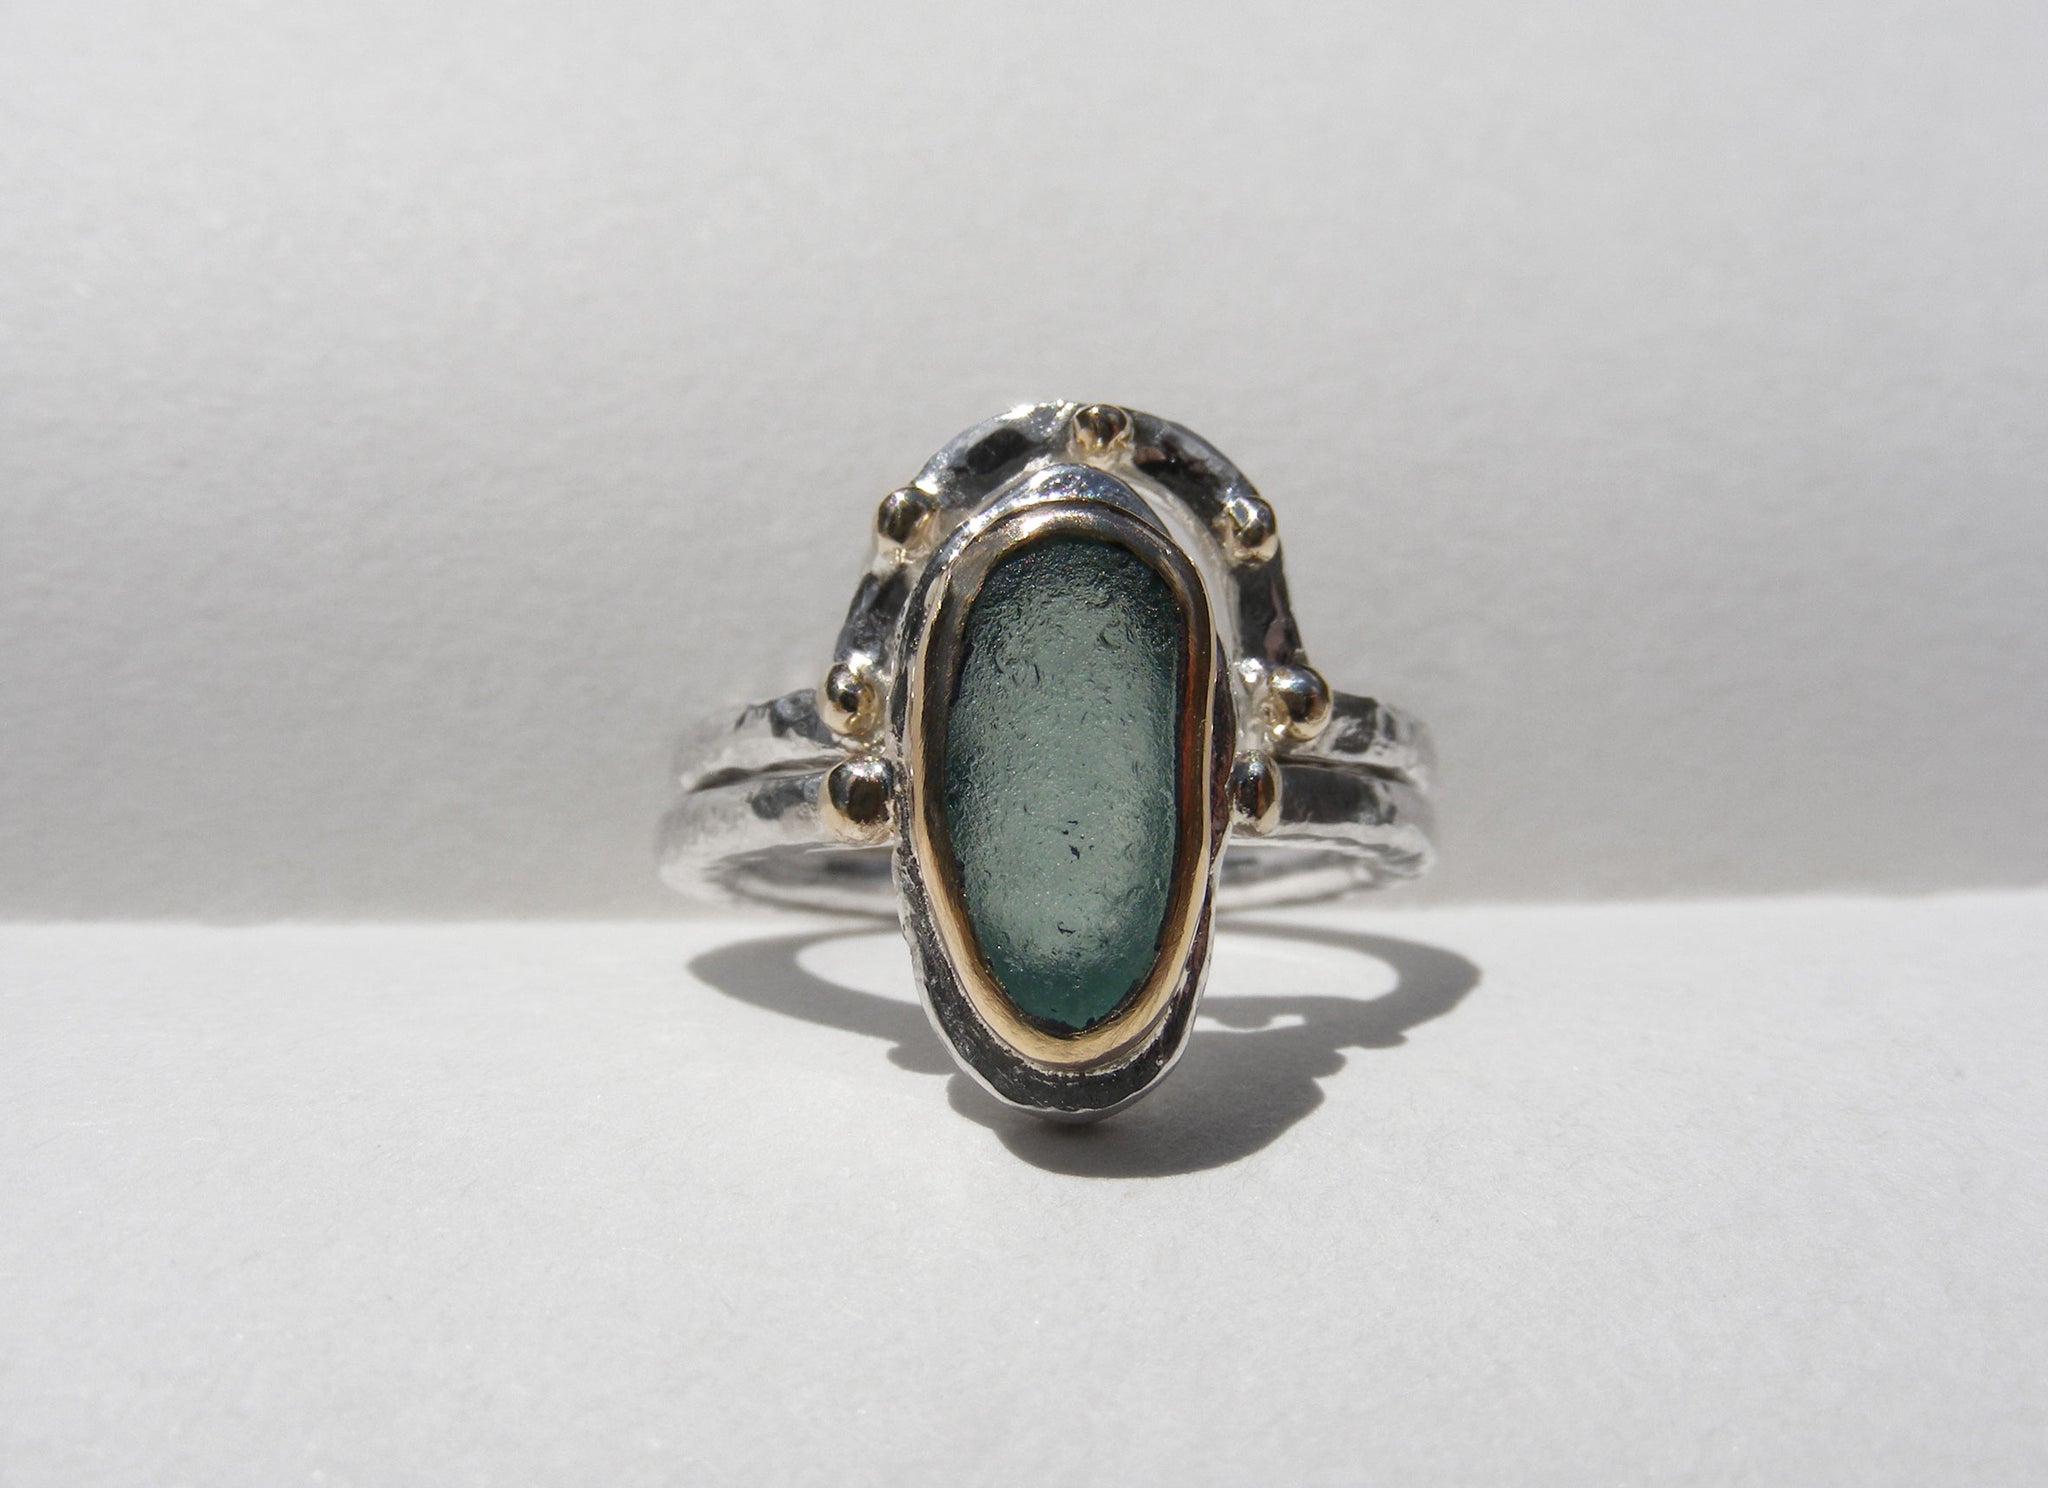 Turquoise sea glass ellipse ring with Tiara